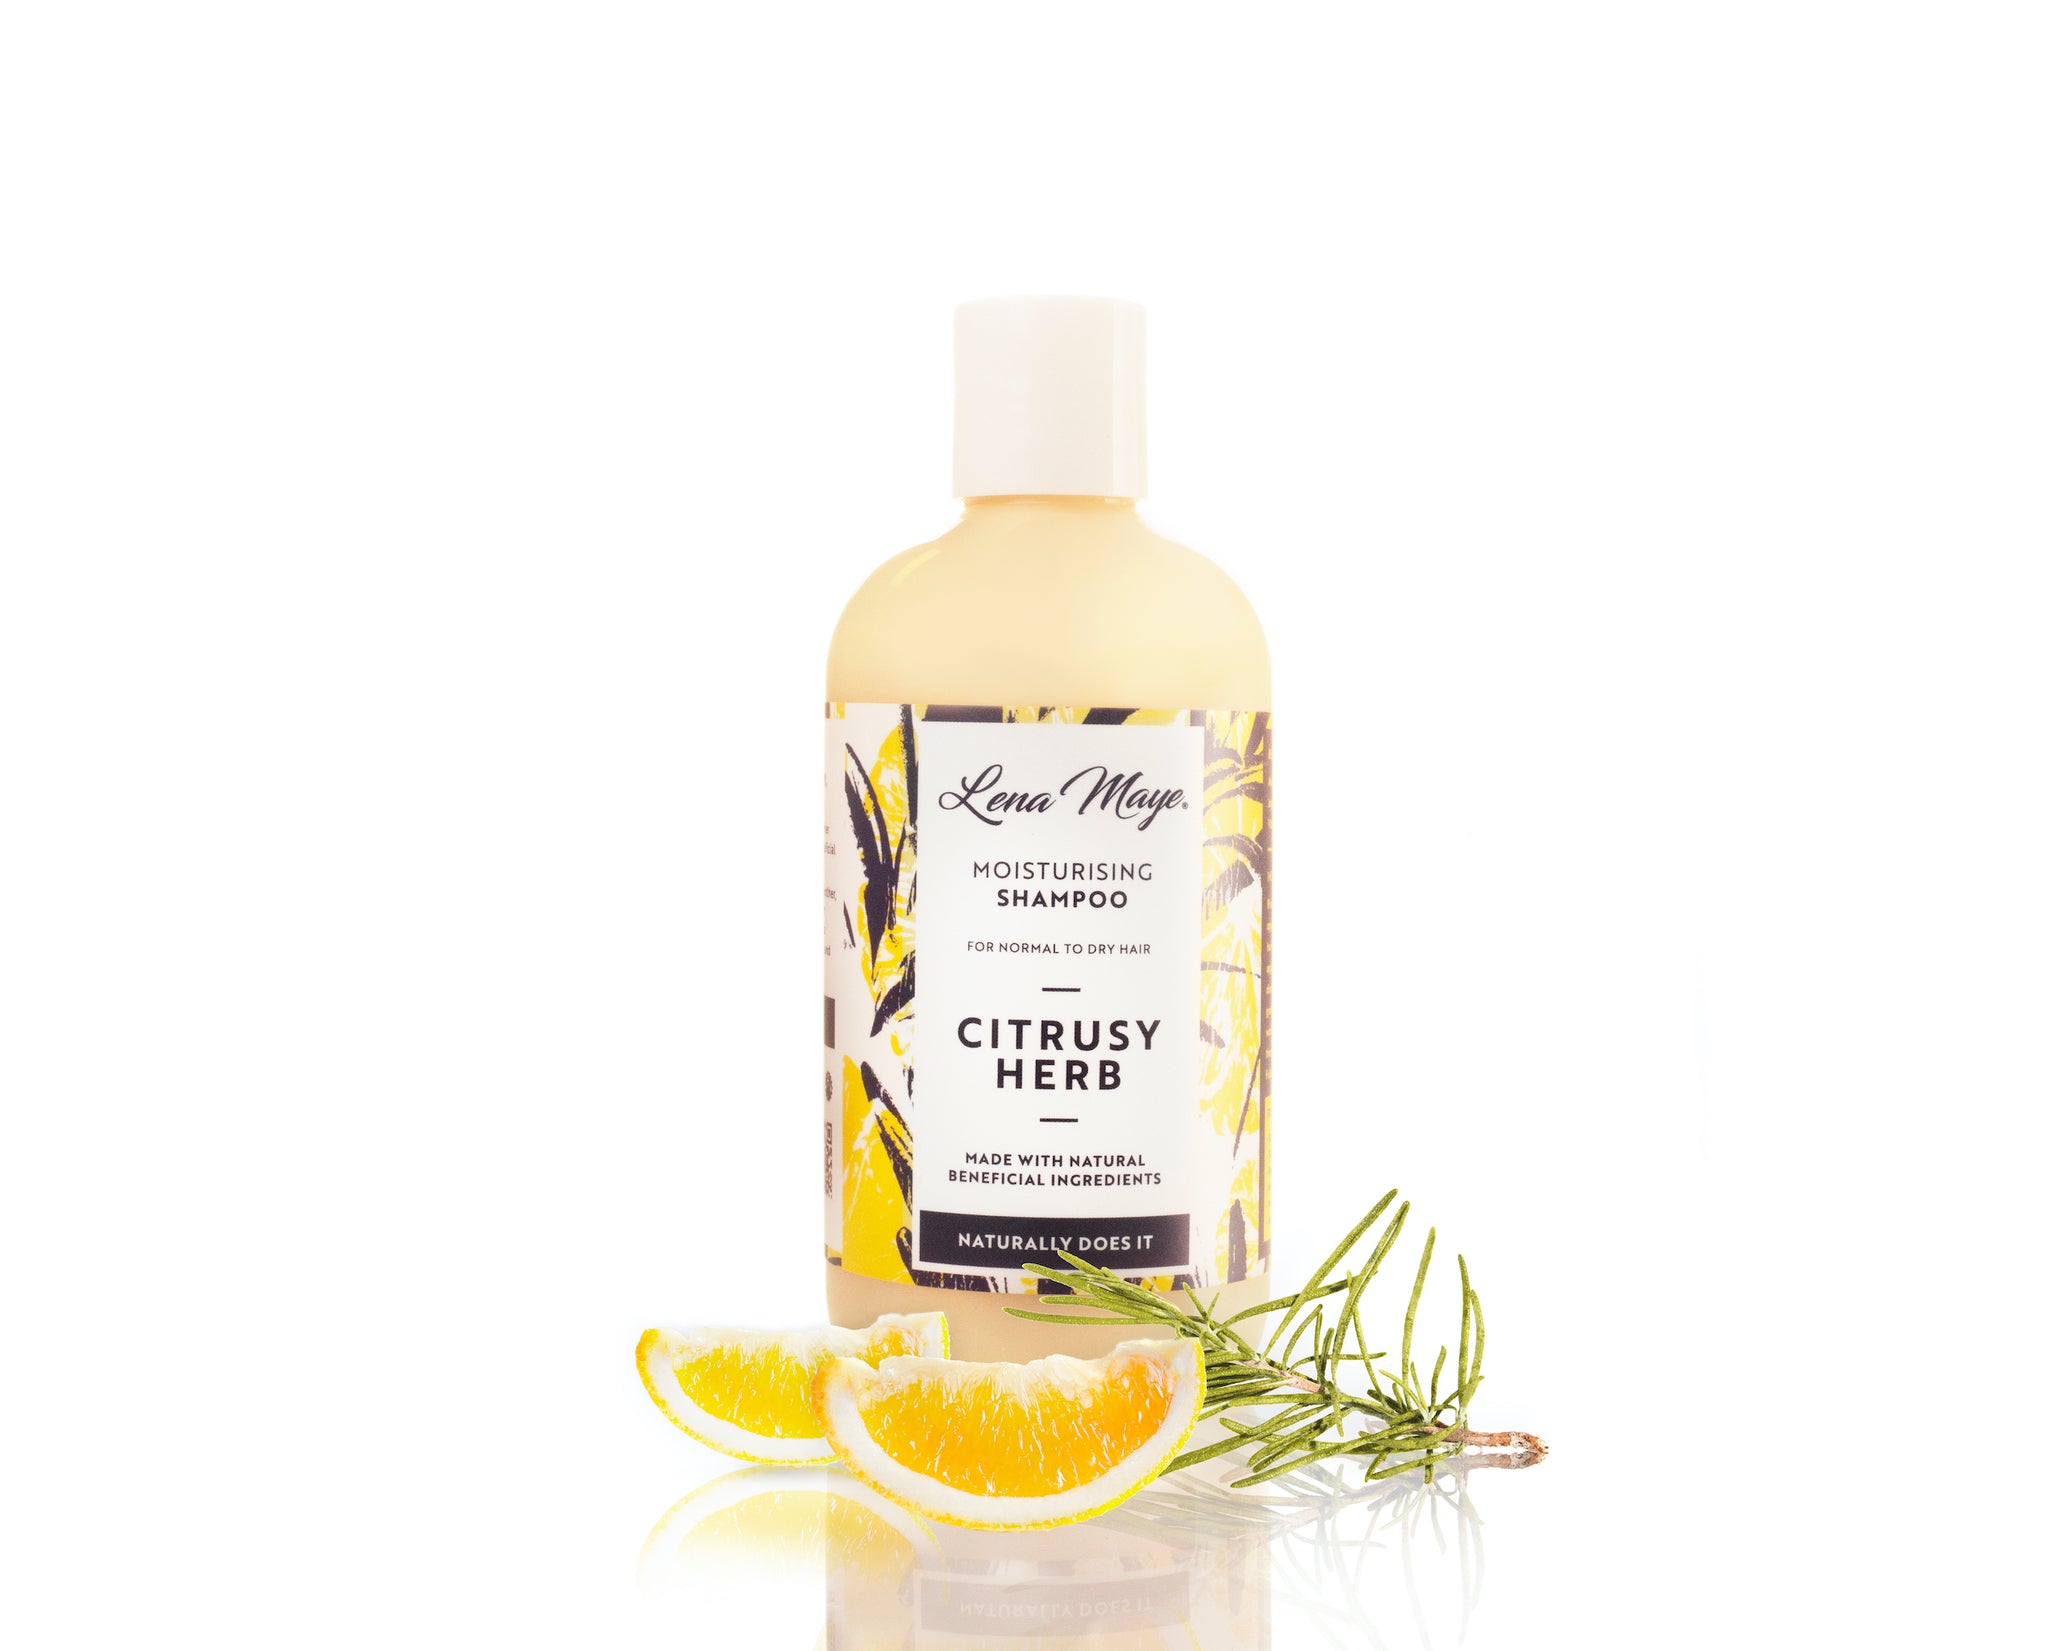 Citrusy Herb Moisturising Shampoo